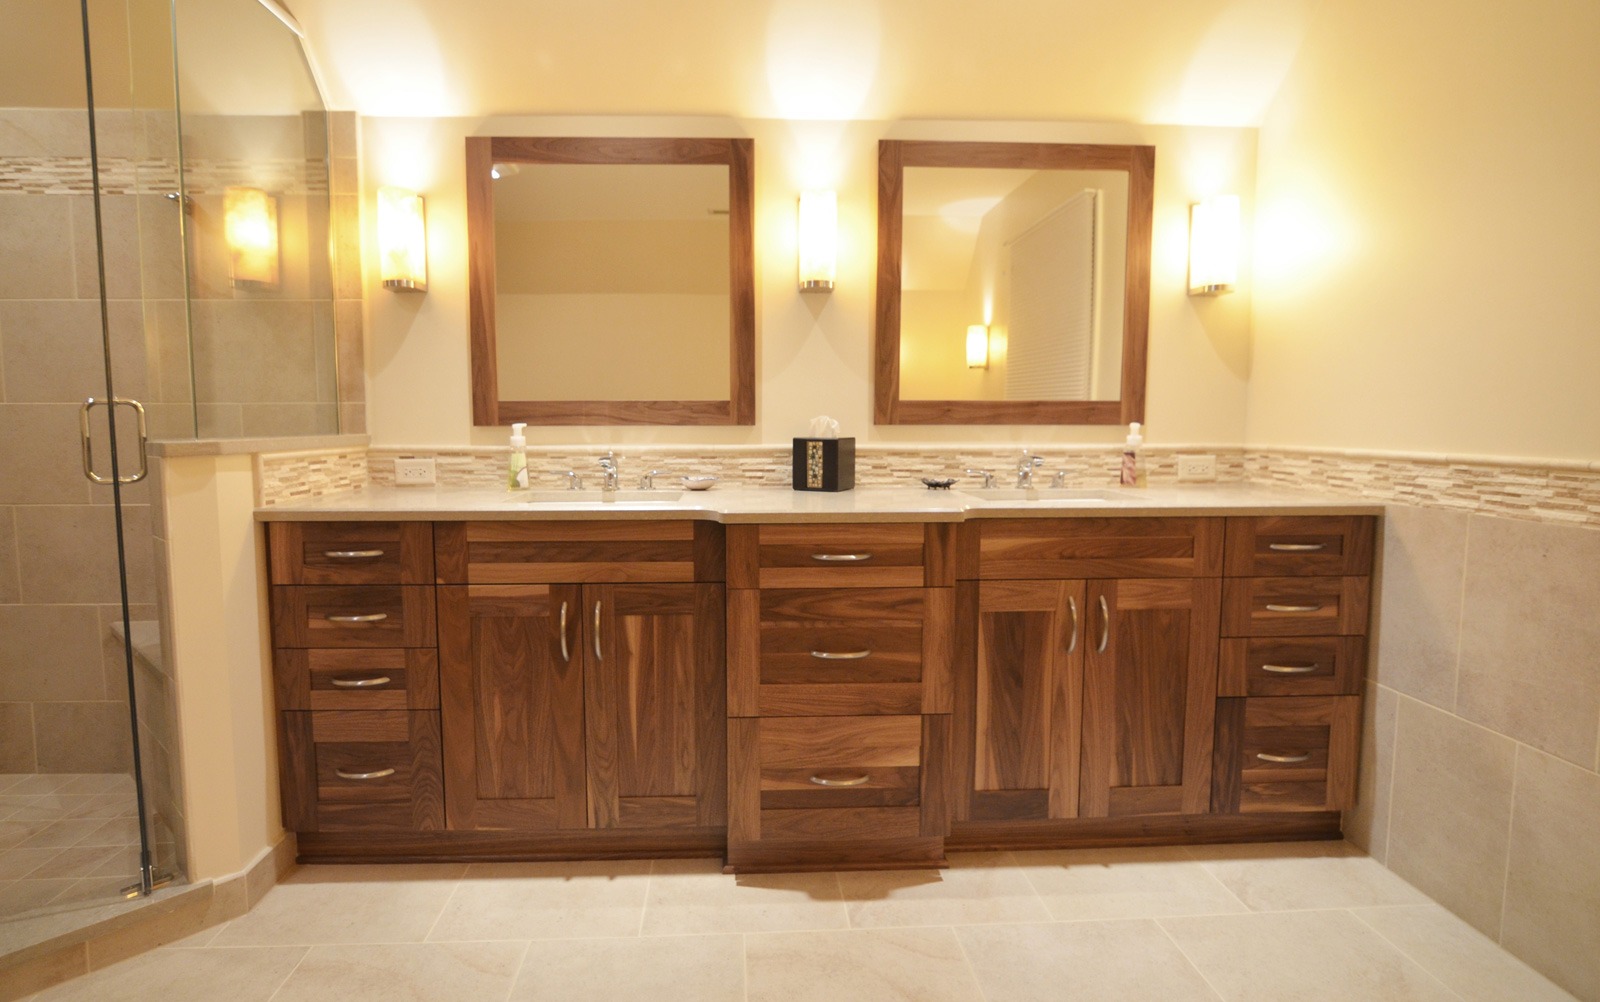 natural bathroom renovation wood vanity double sink an mirror glass shower light tile floor